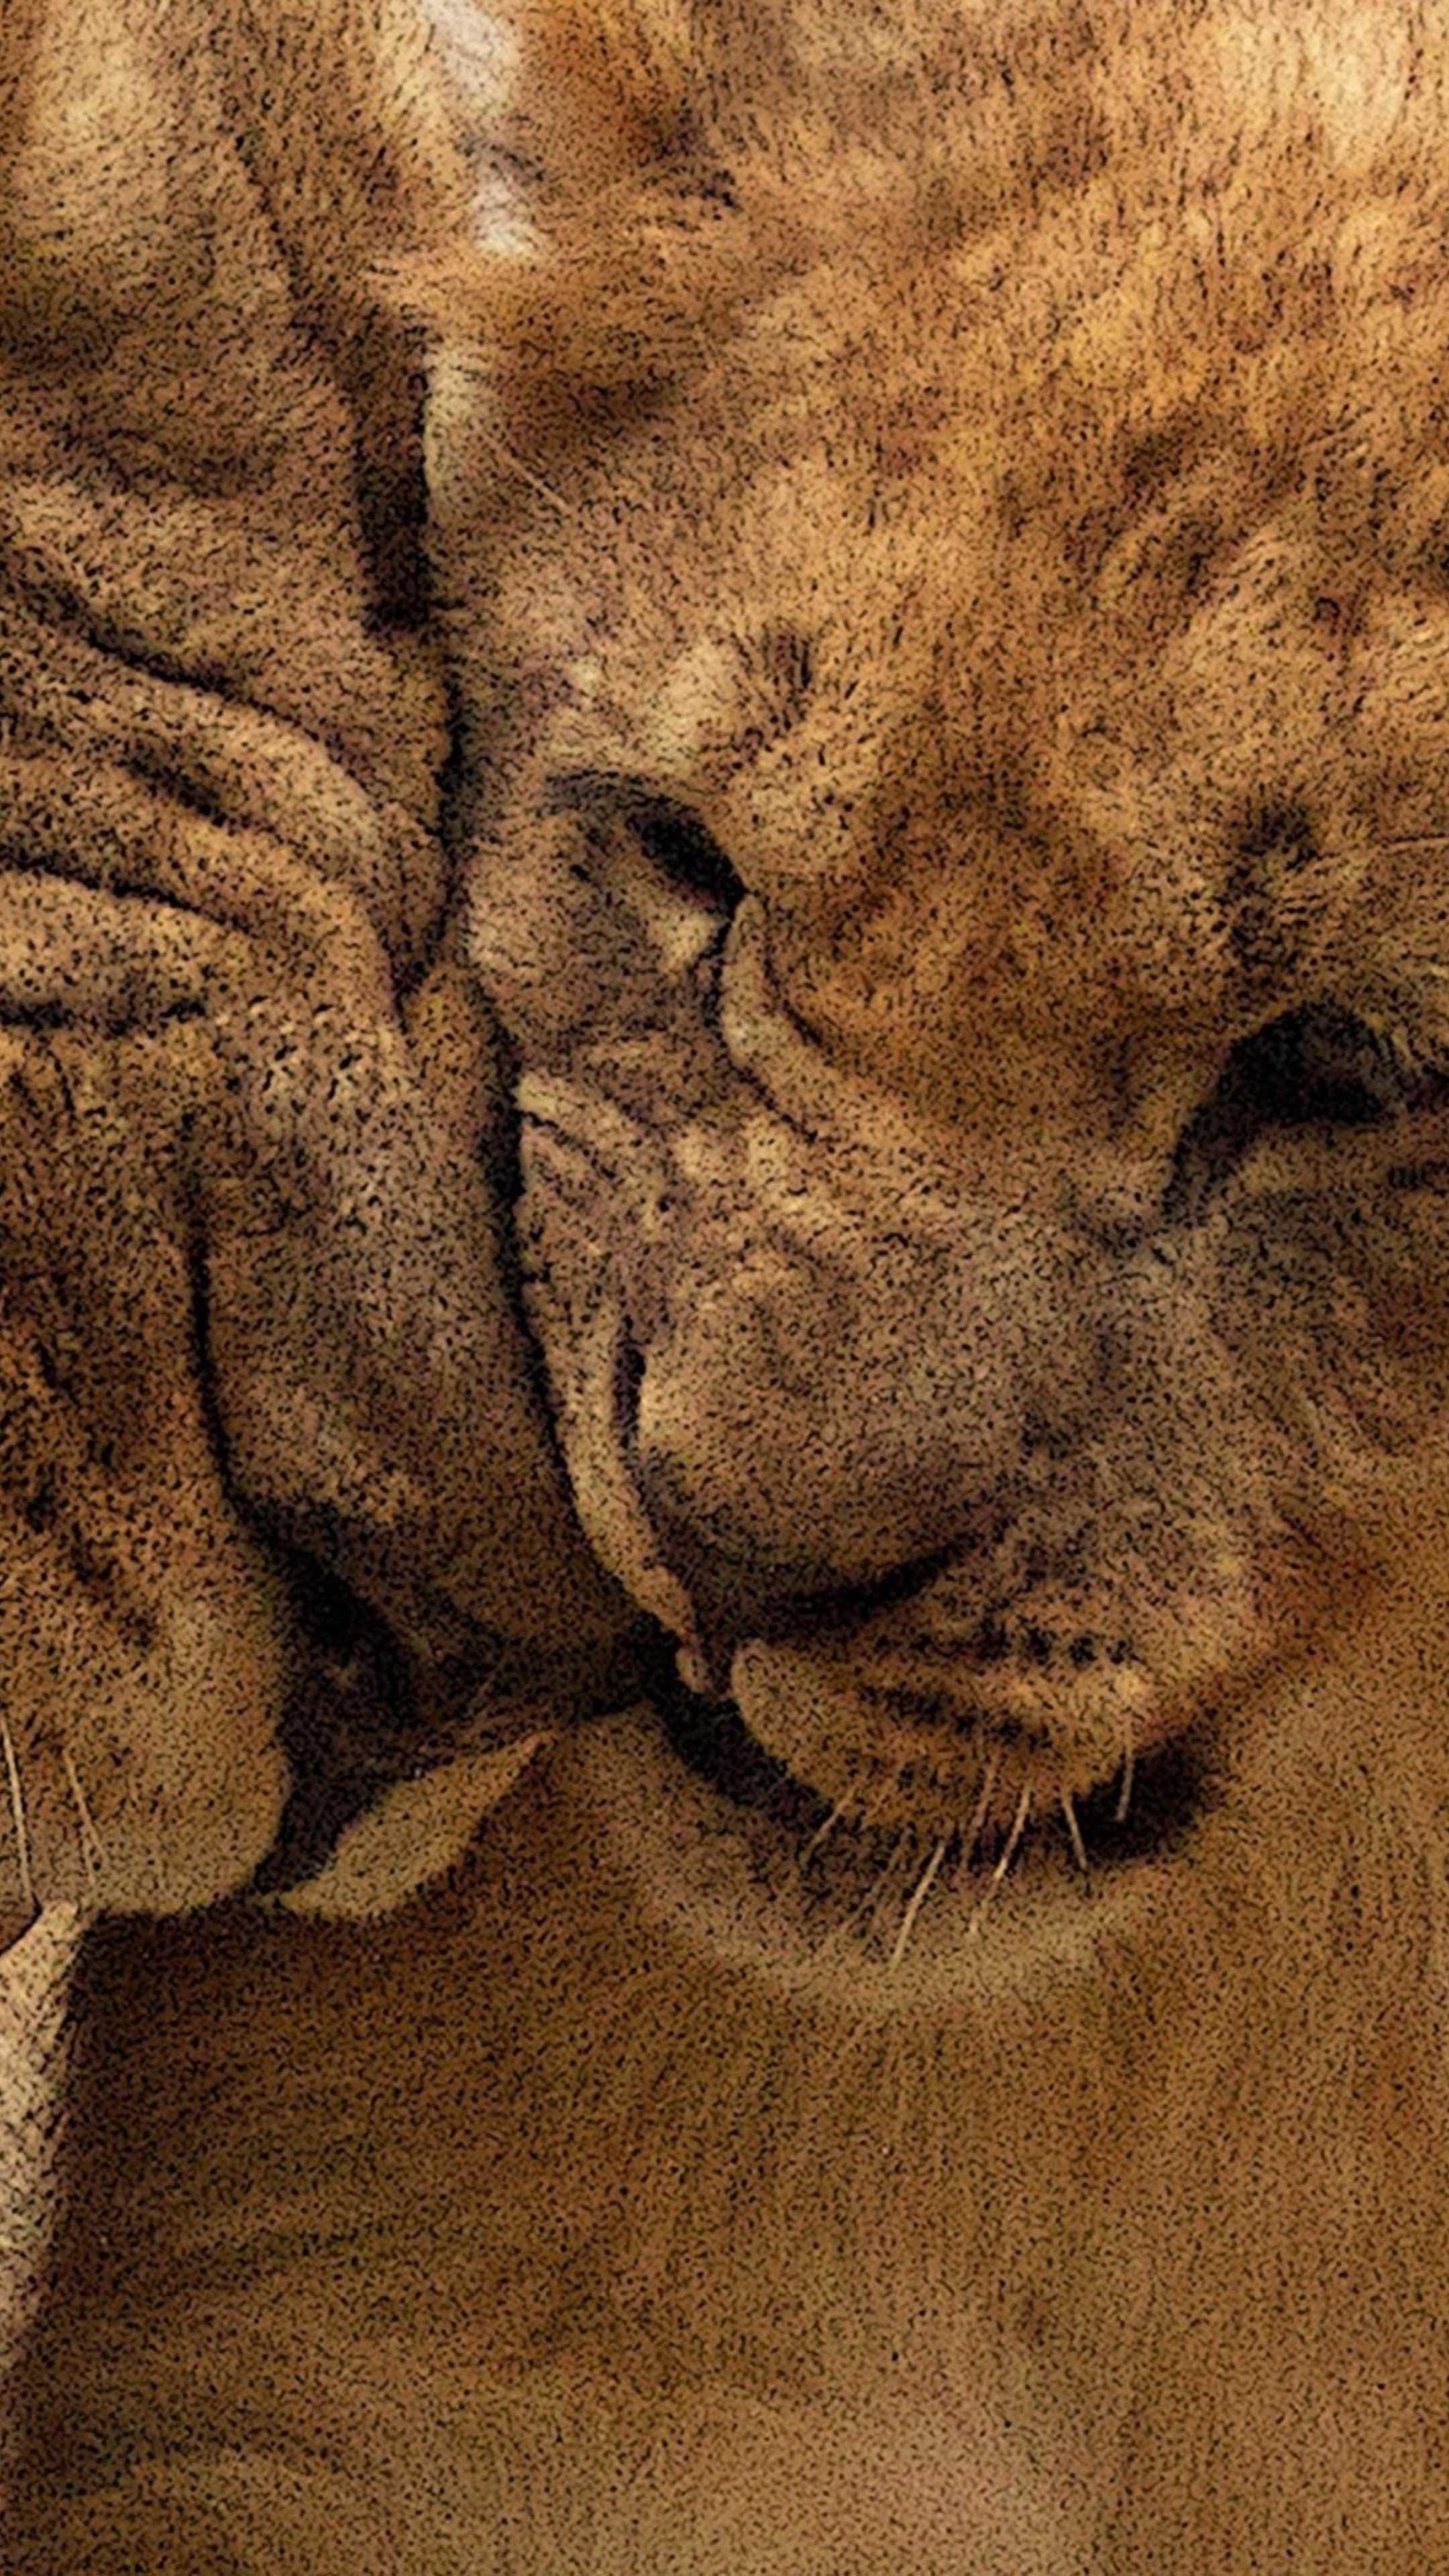 Lion Mother Cub HD Wallpaper (2160x3840)